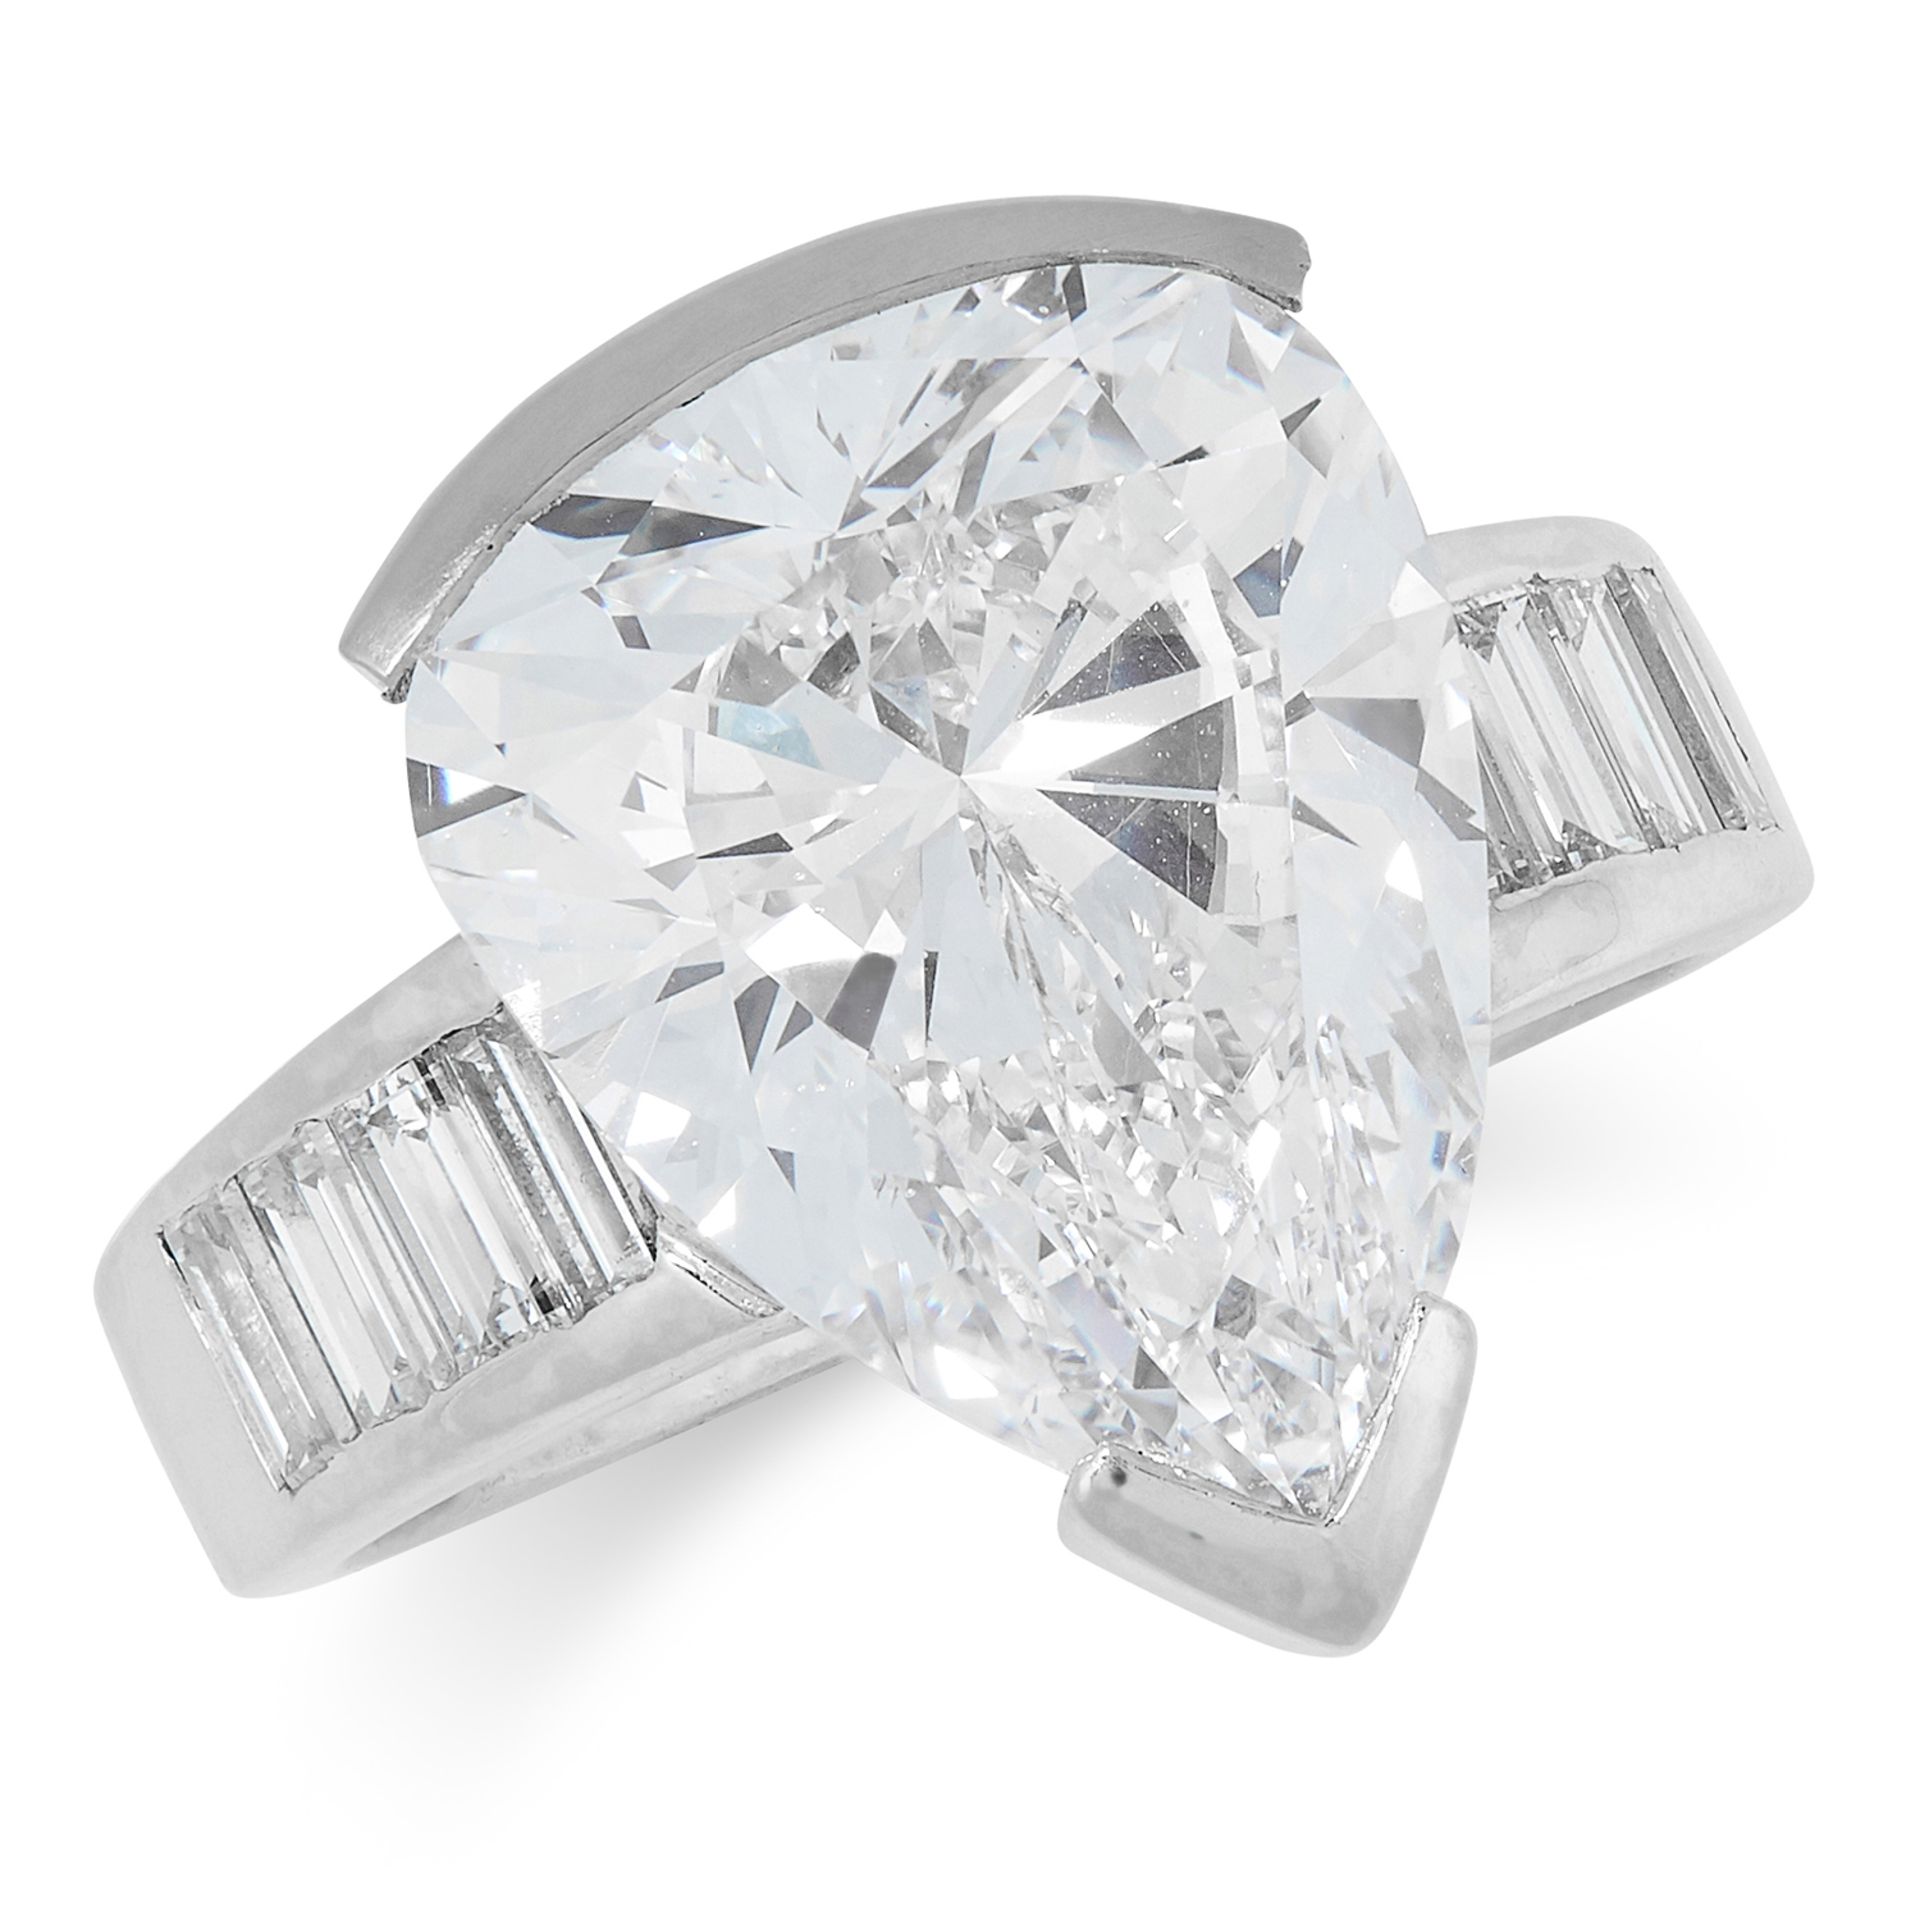 A 7.15 CARAT D COLOUR SOLITAIRE DIAMOND RING set with a pear brilliant cut diamond of 7.15 carats